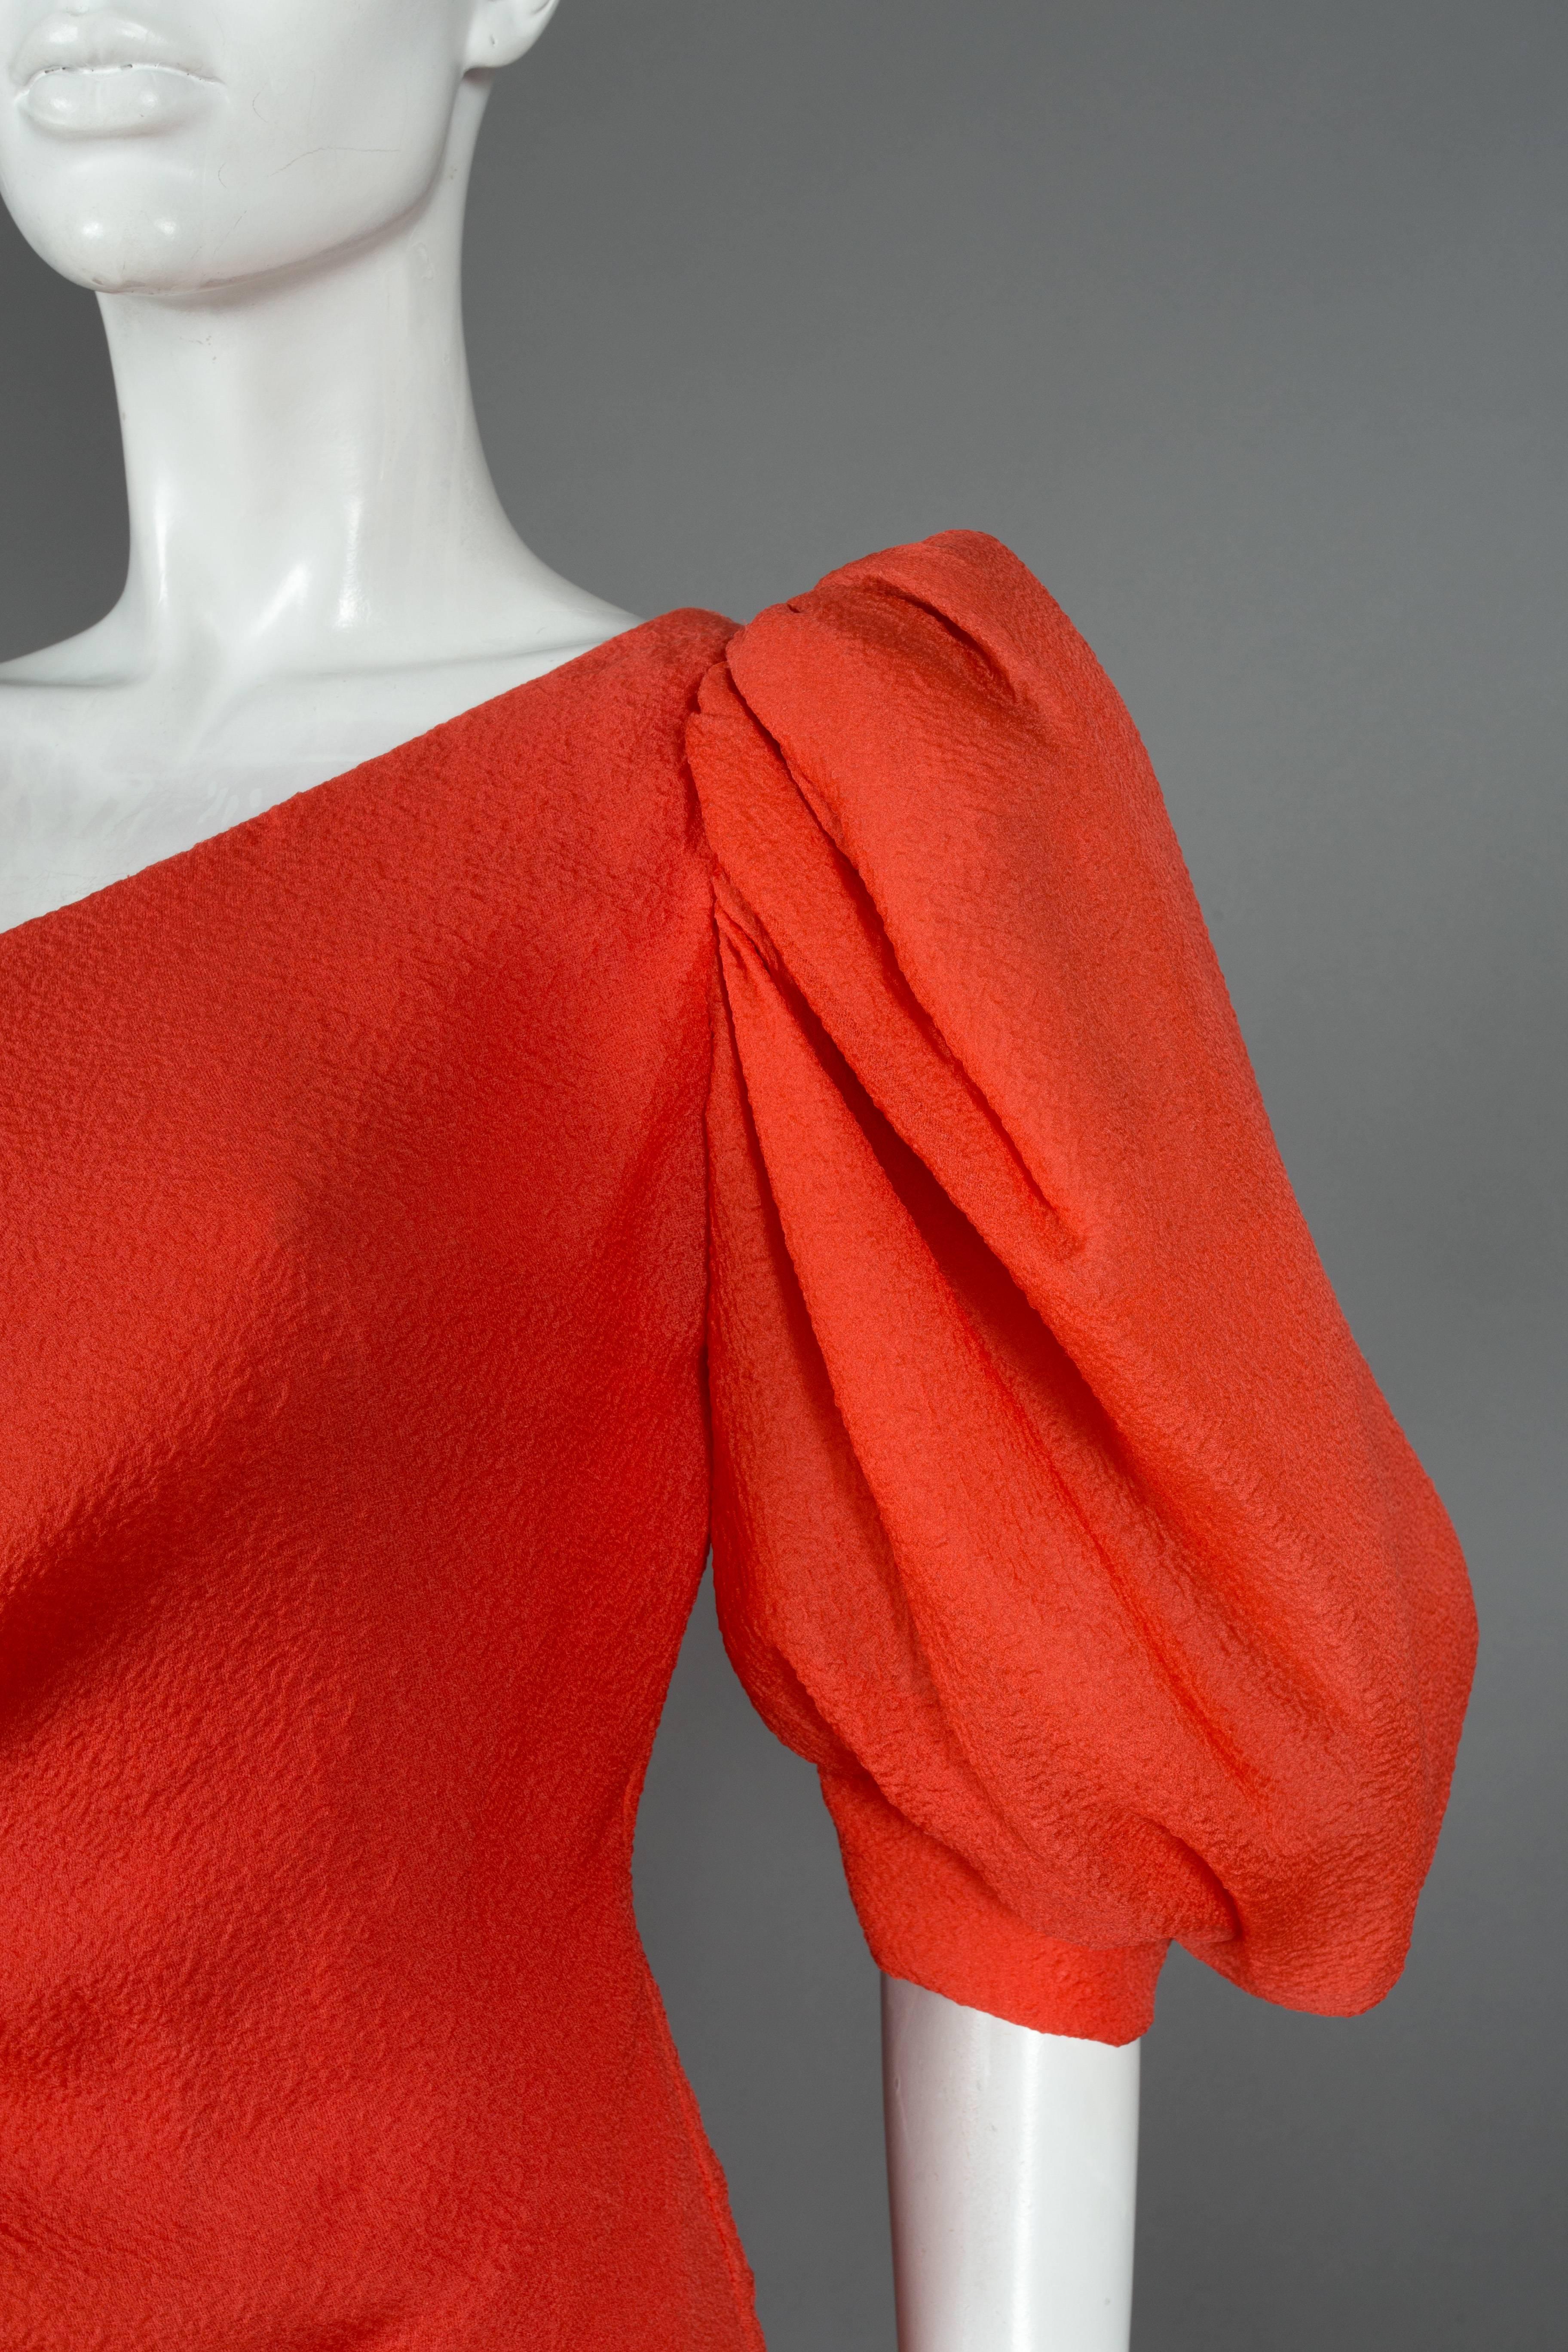 Givenchy silk crêpe coral cocktail dress, c. 1988 1